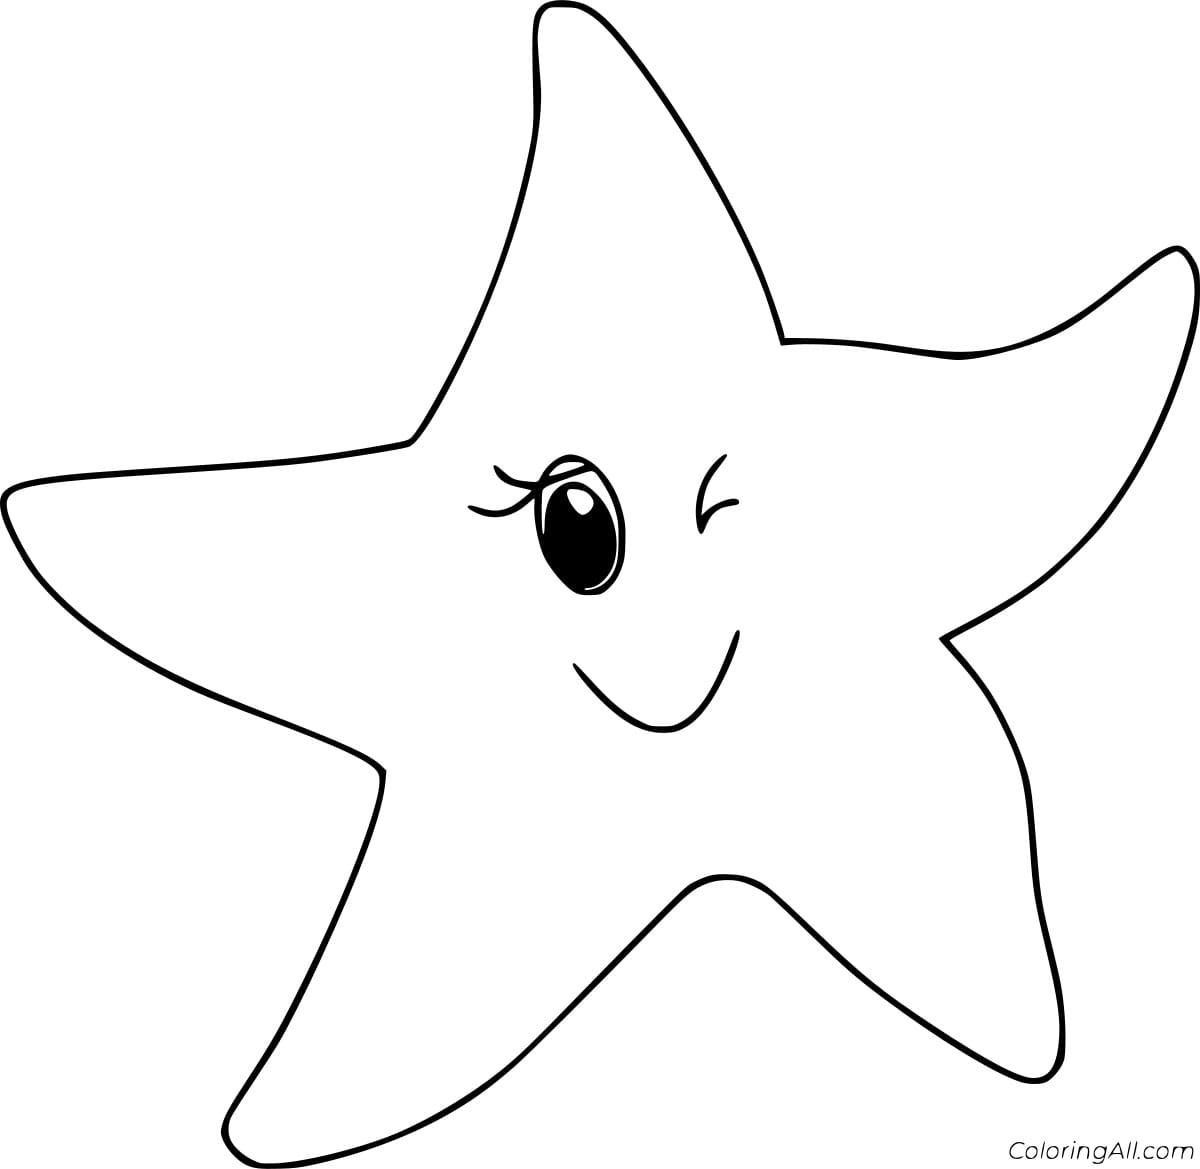 Naughty Starfish Image Coloring Page